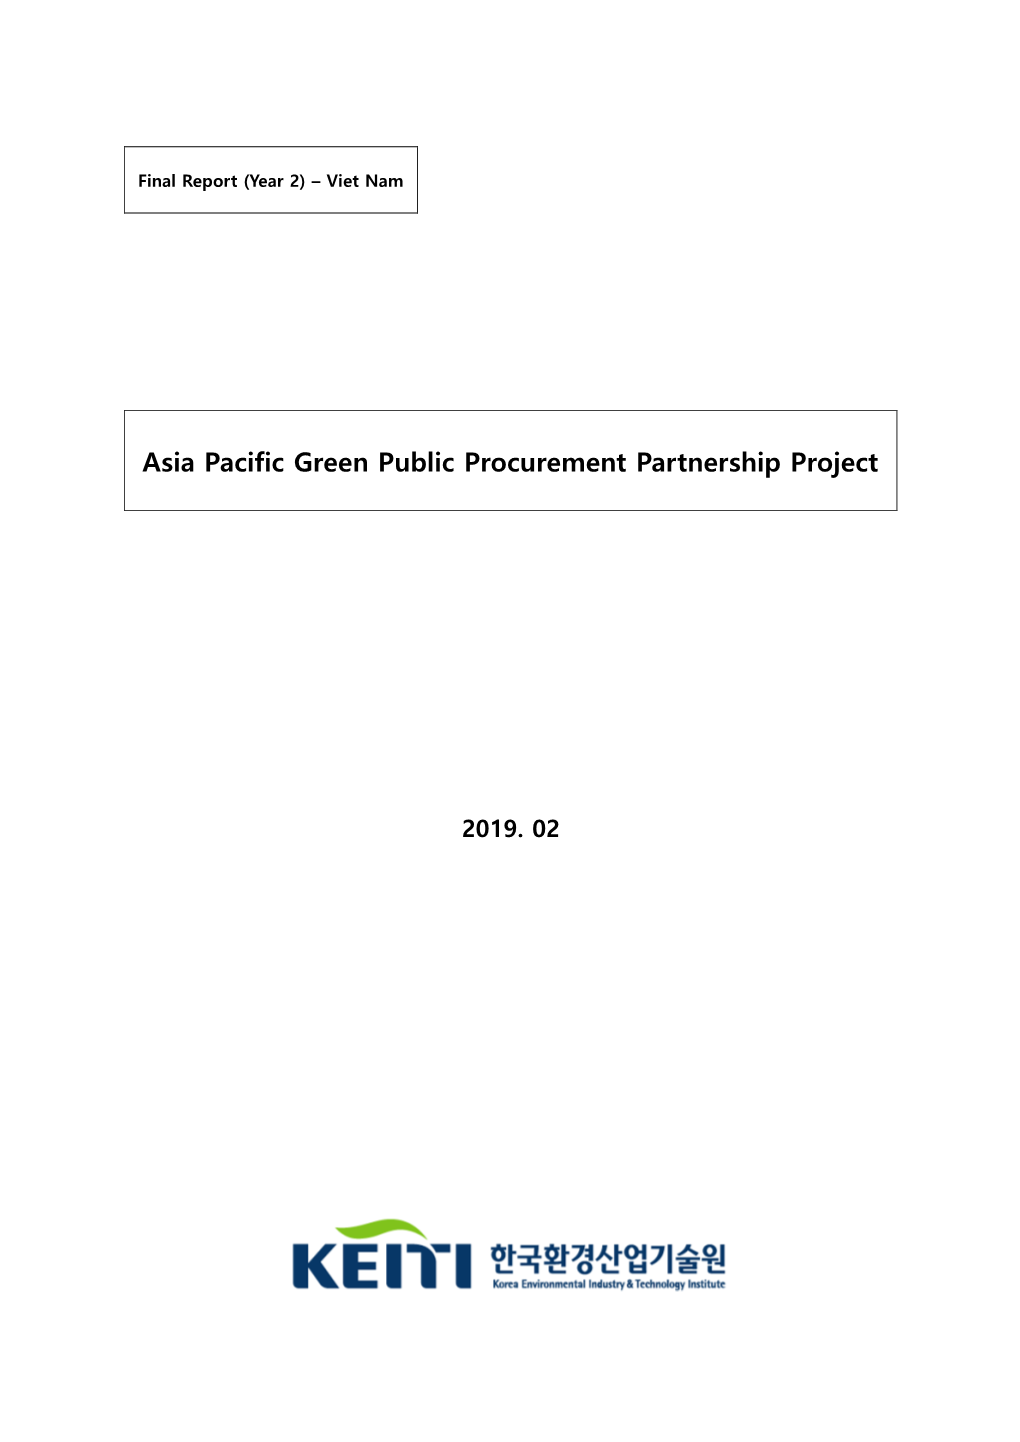 Asia Pacific Green Public Procurement Partnership Project